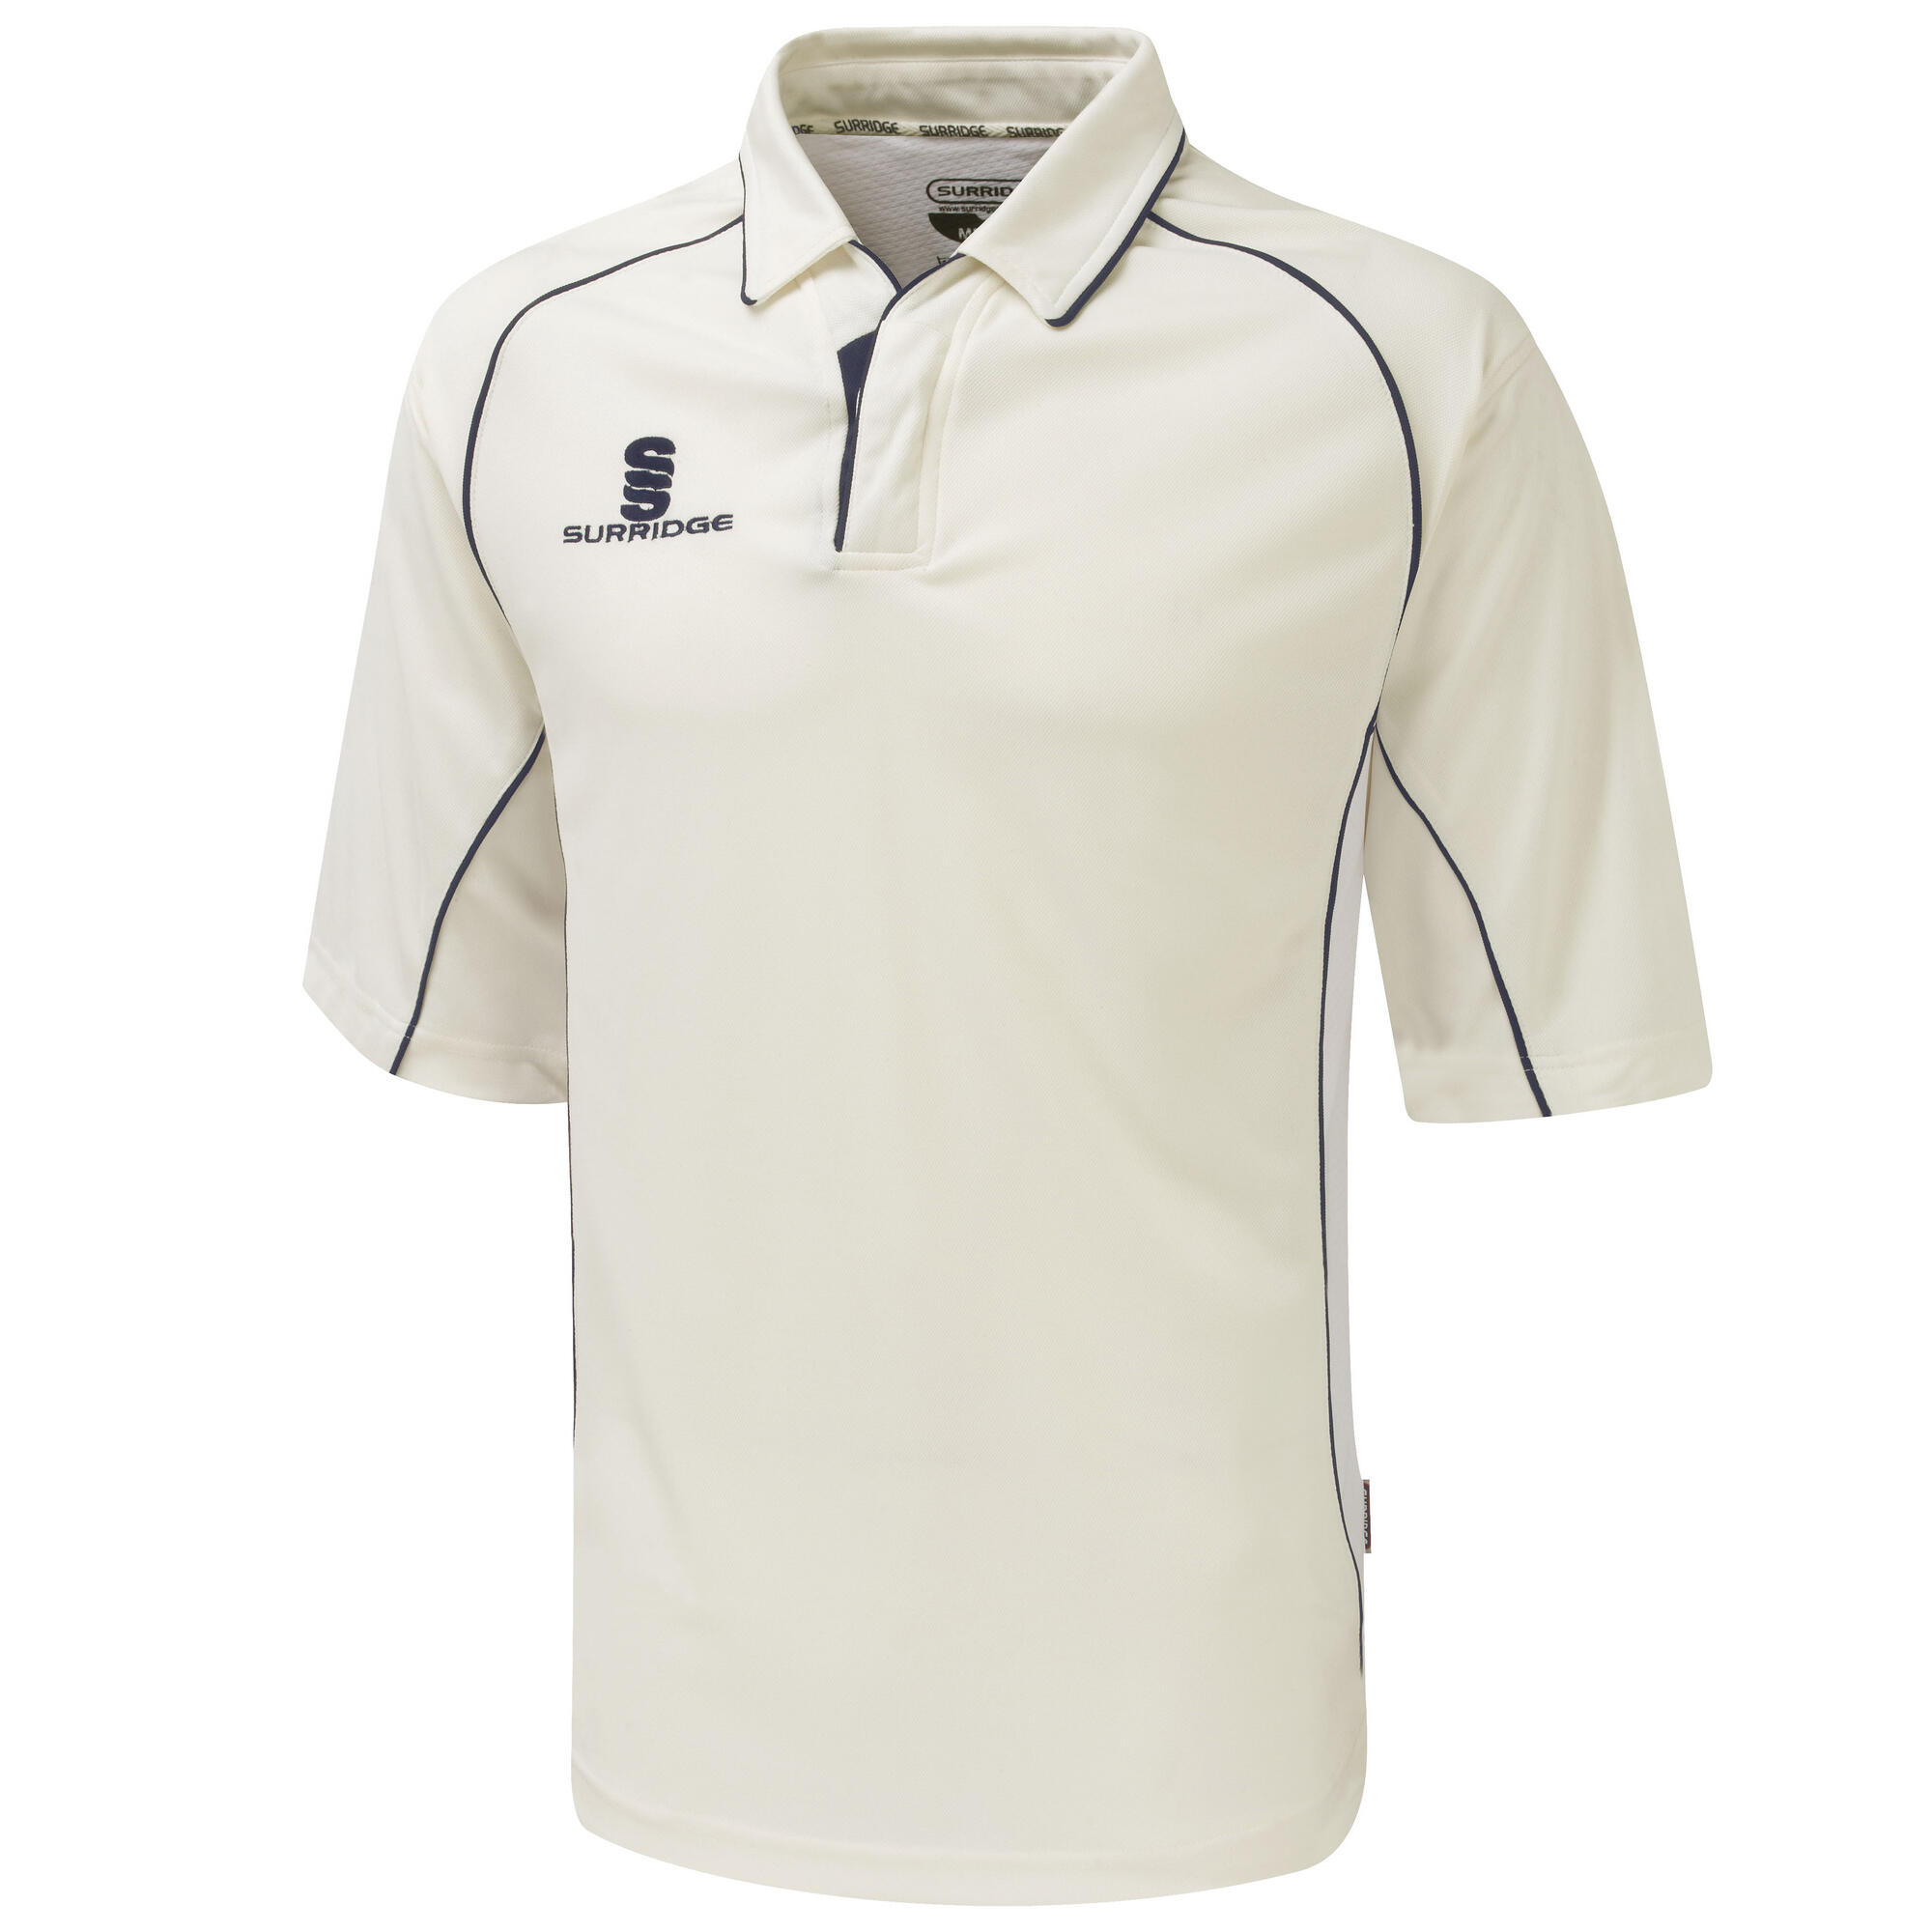 Boys Kids Sports Premier Shirt 3/4 Polo Shirt (White/Navy trim) 1/1